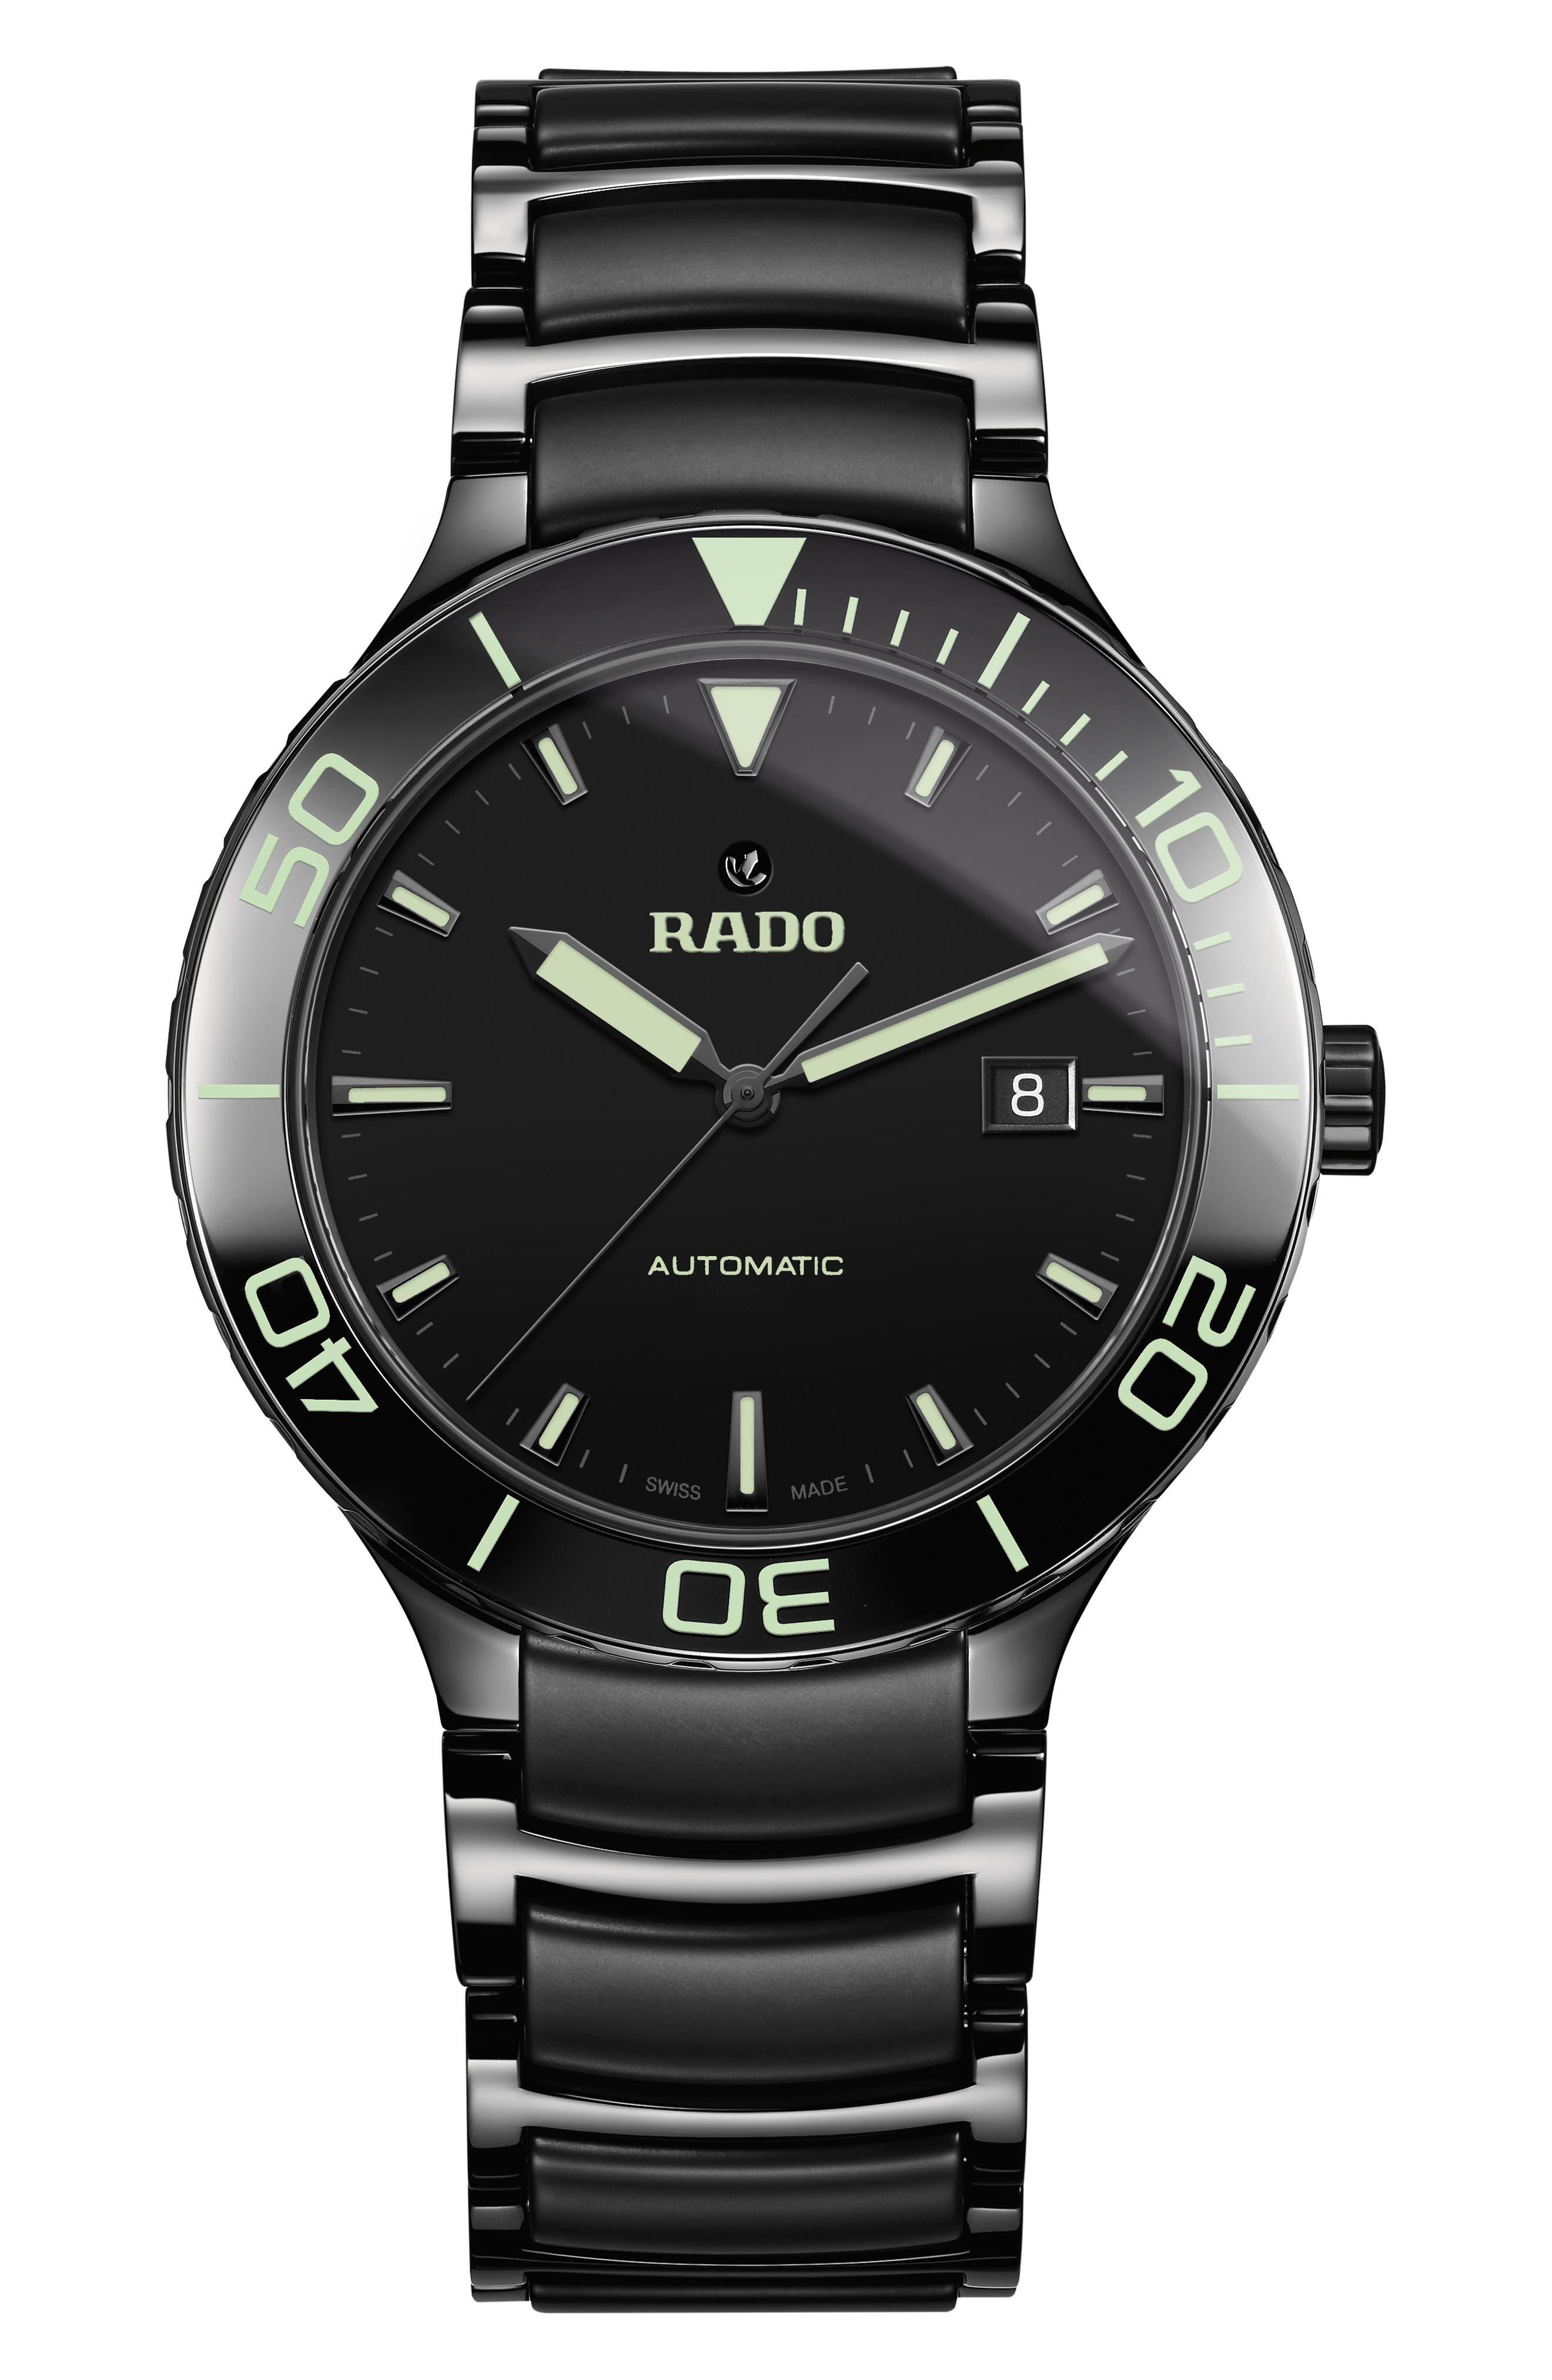 18MM Gold Plated NSA Steel-Inox Watch Bracelet For RADO DiaStar Mens Watch  • 24.90$ | Watch bands, Bracelet watch, Watches for men